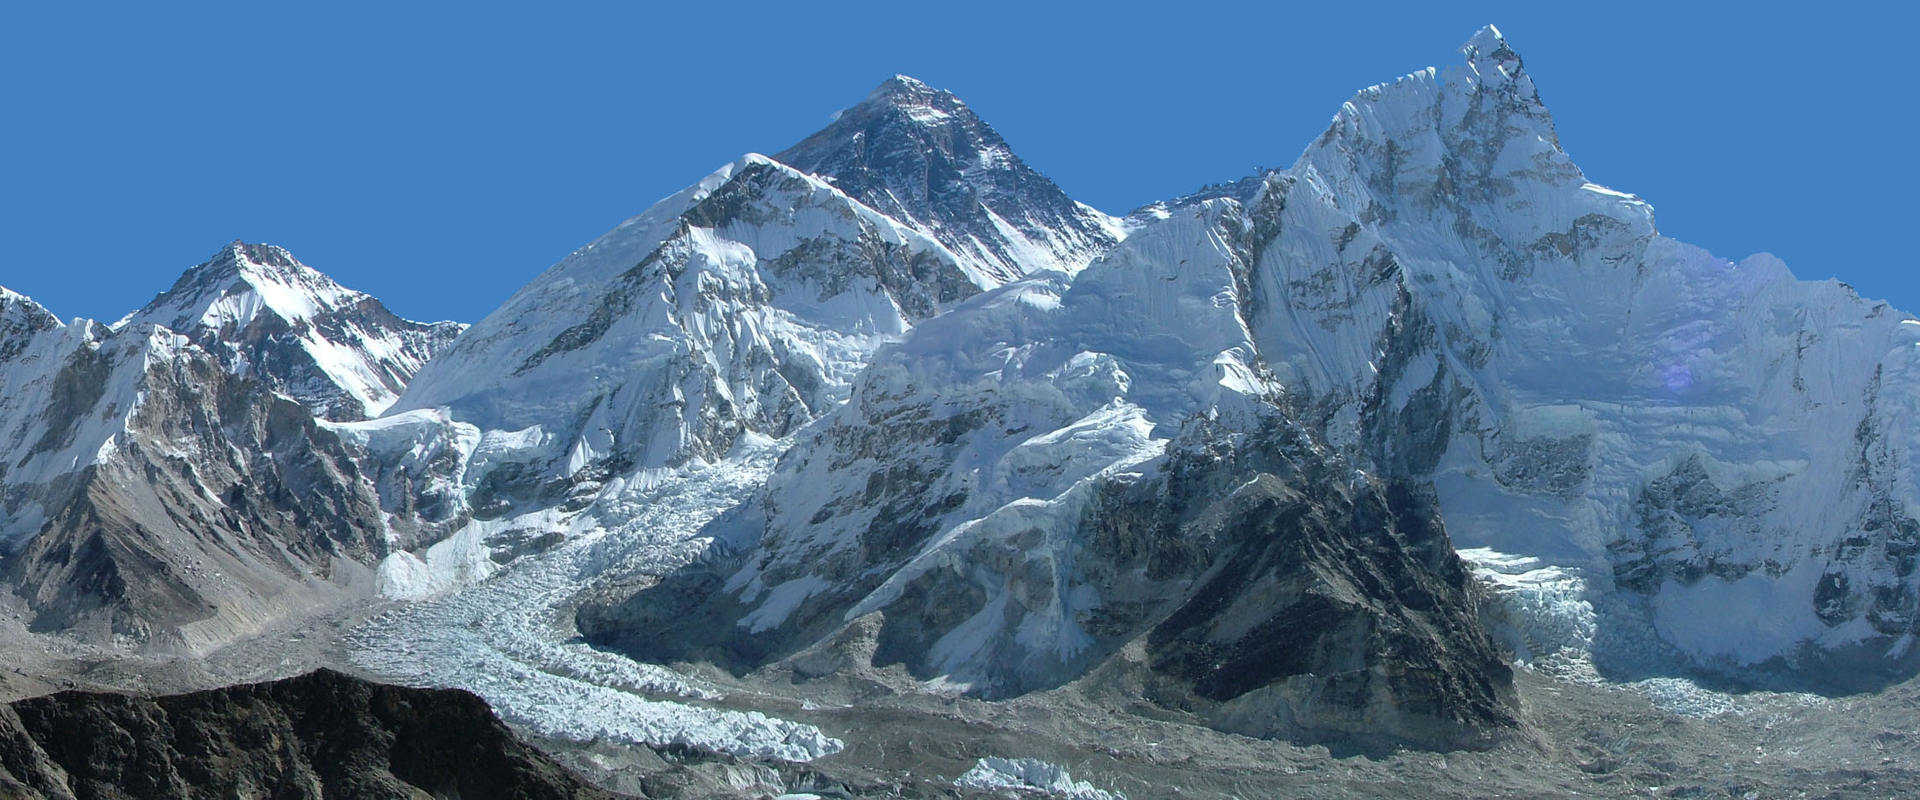 Mount Everest in Nepal